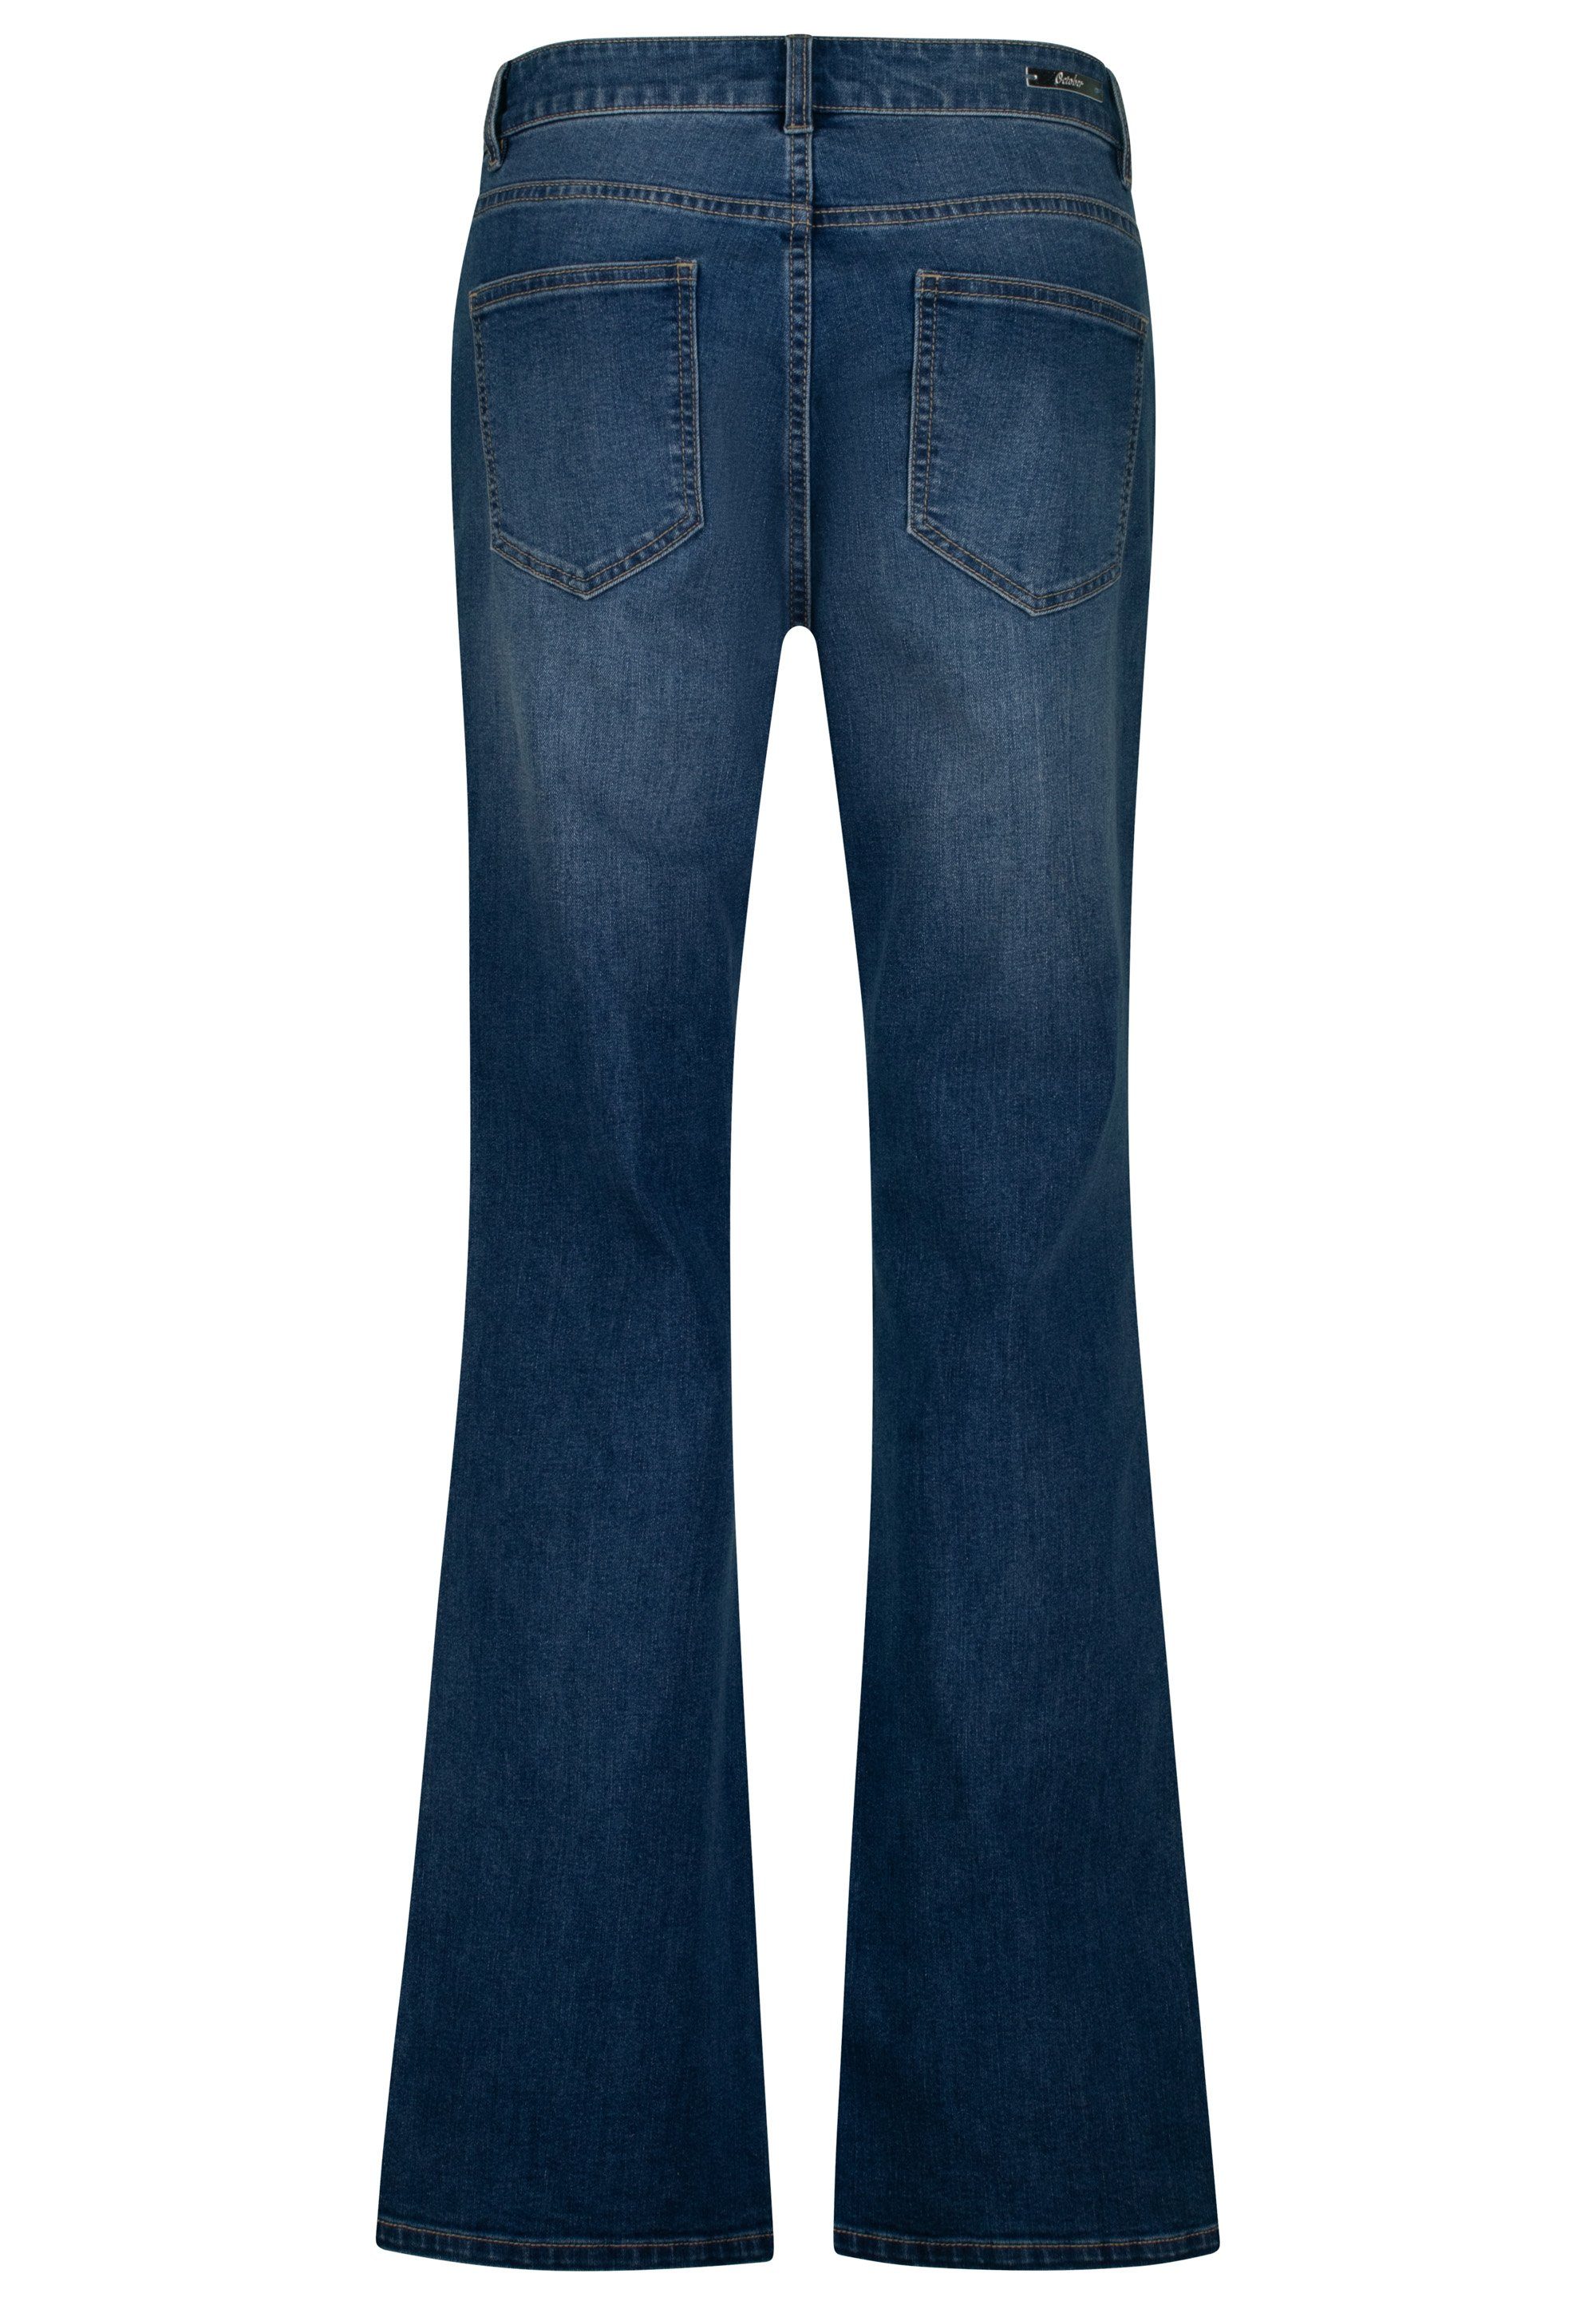 Bequeme Bootcut-Schnitt im tollen October Jeans